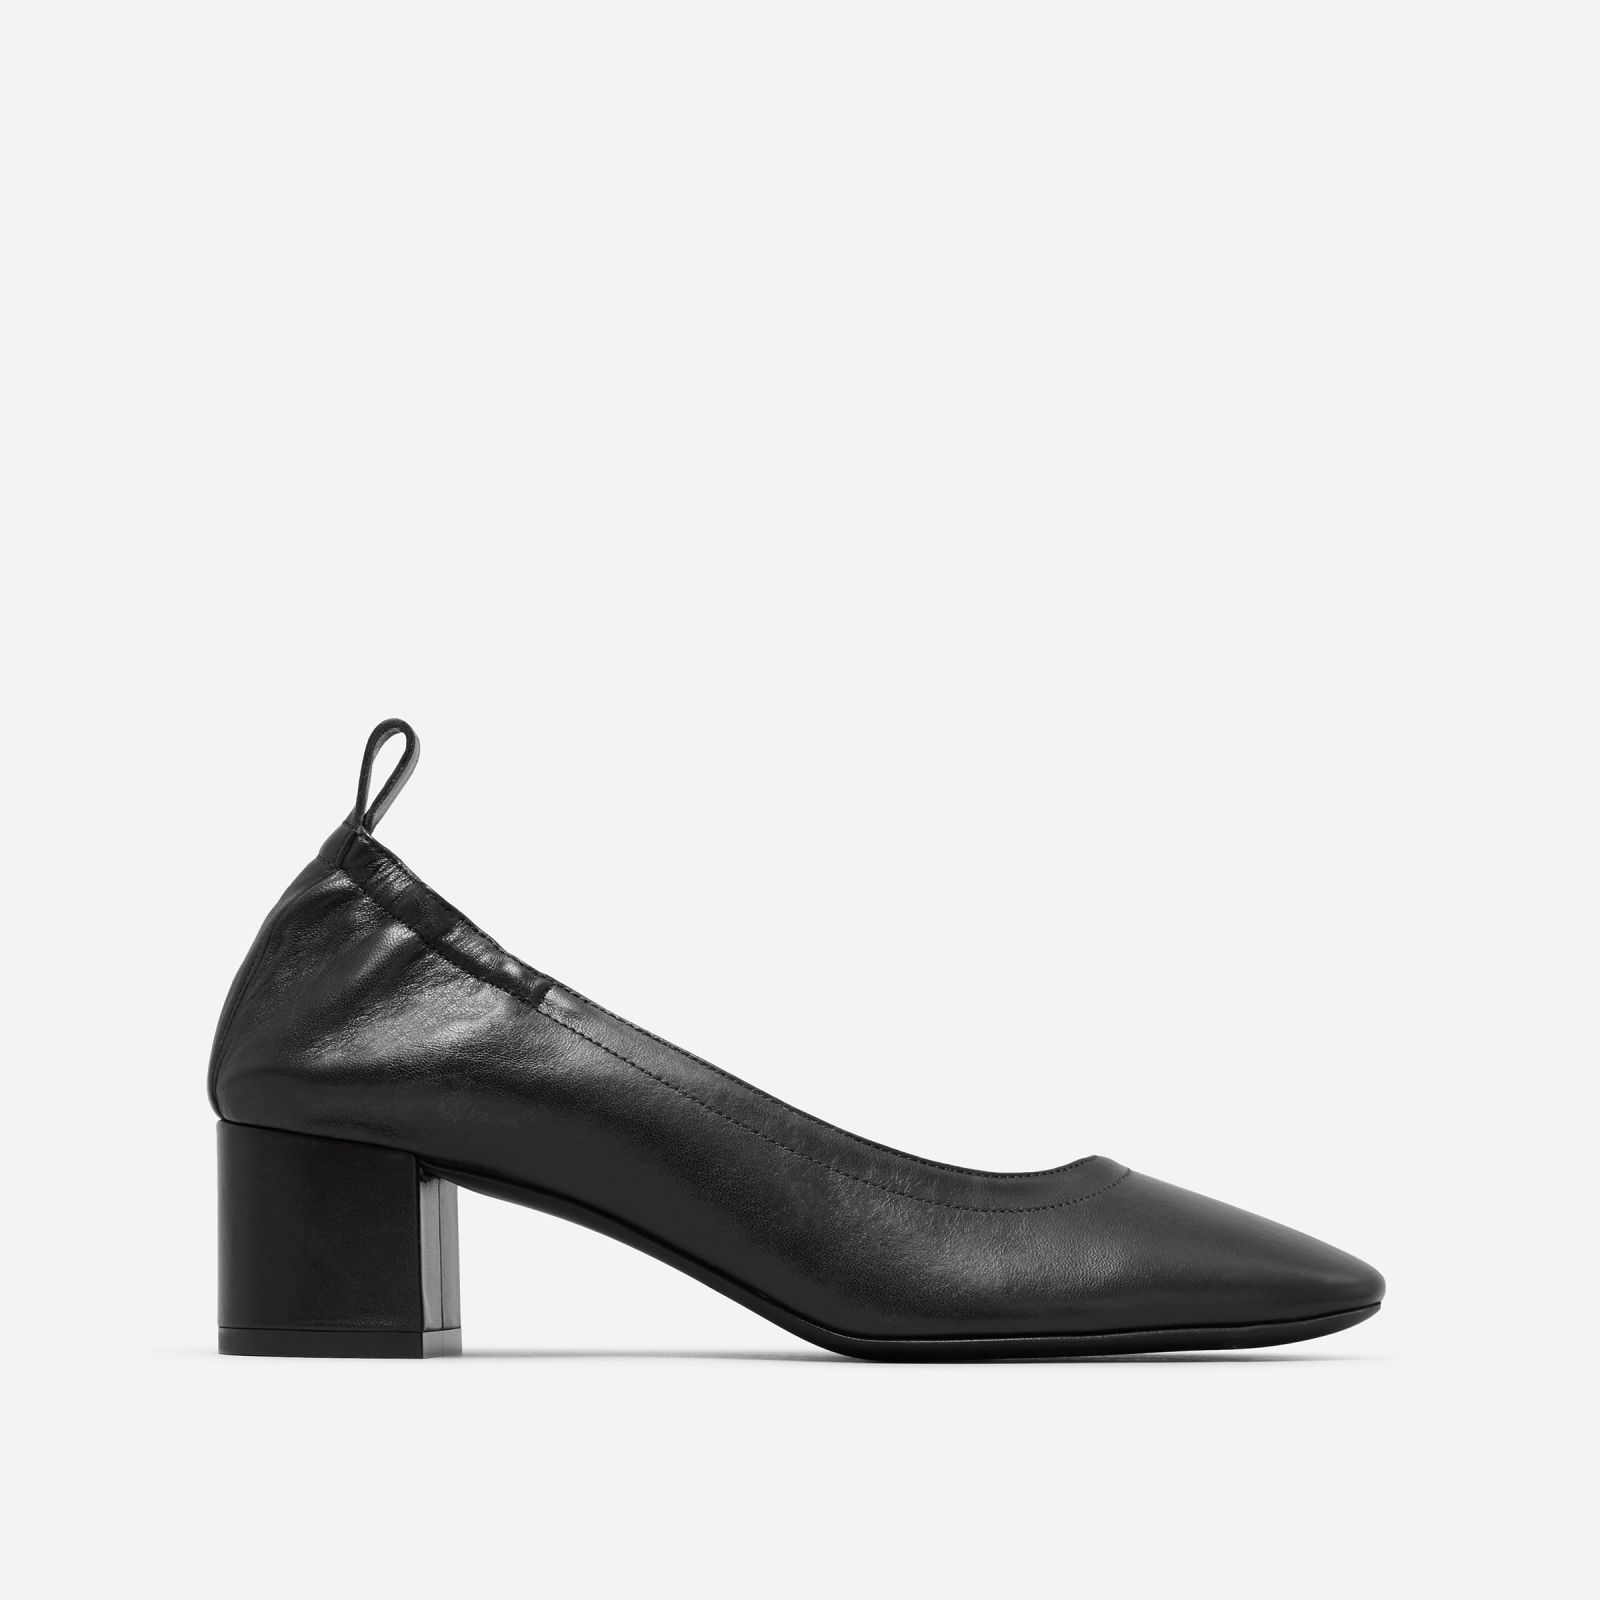 Women's Leather Block Heel Pump by Everlane in Black, Size 5 | Everlane